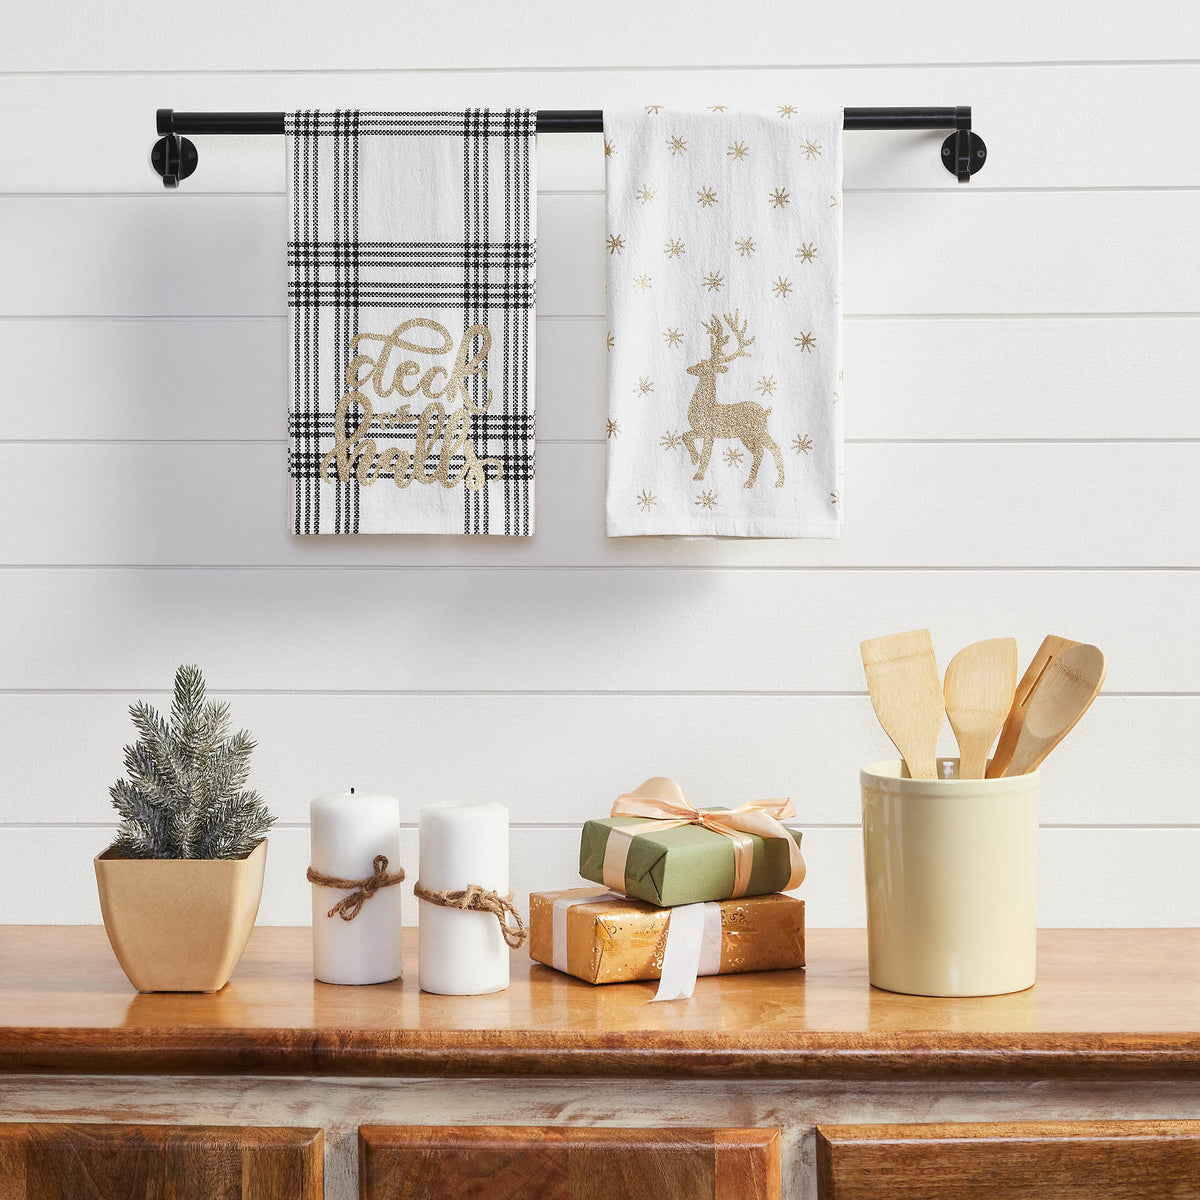 Farmhouse Cow Hand Towel, Kitchen Towel, Mini ladder decor, BATHROOM DECOR